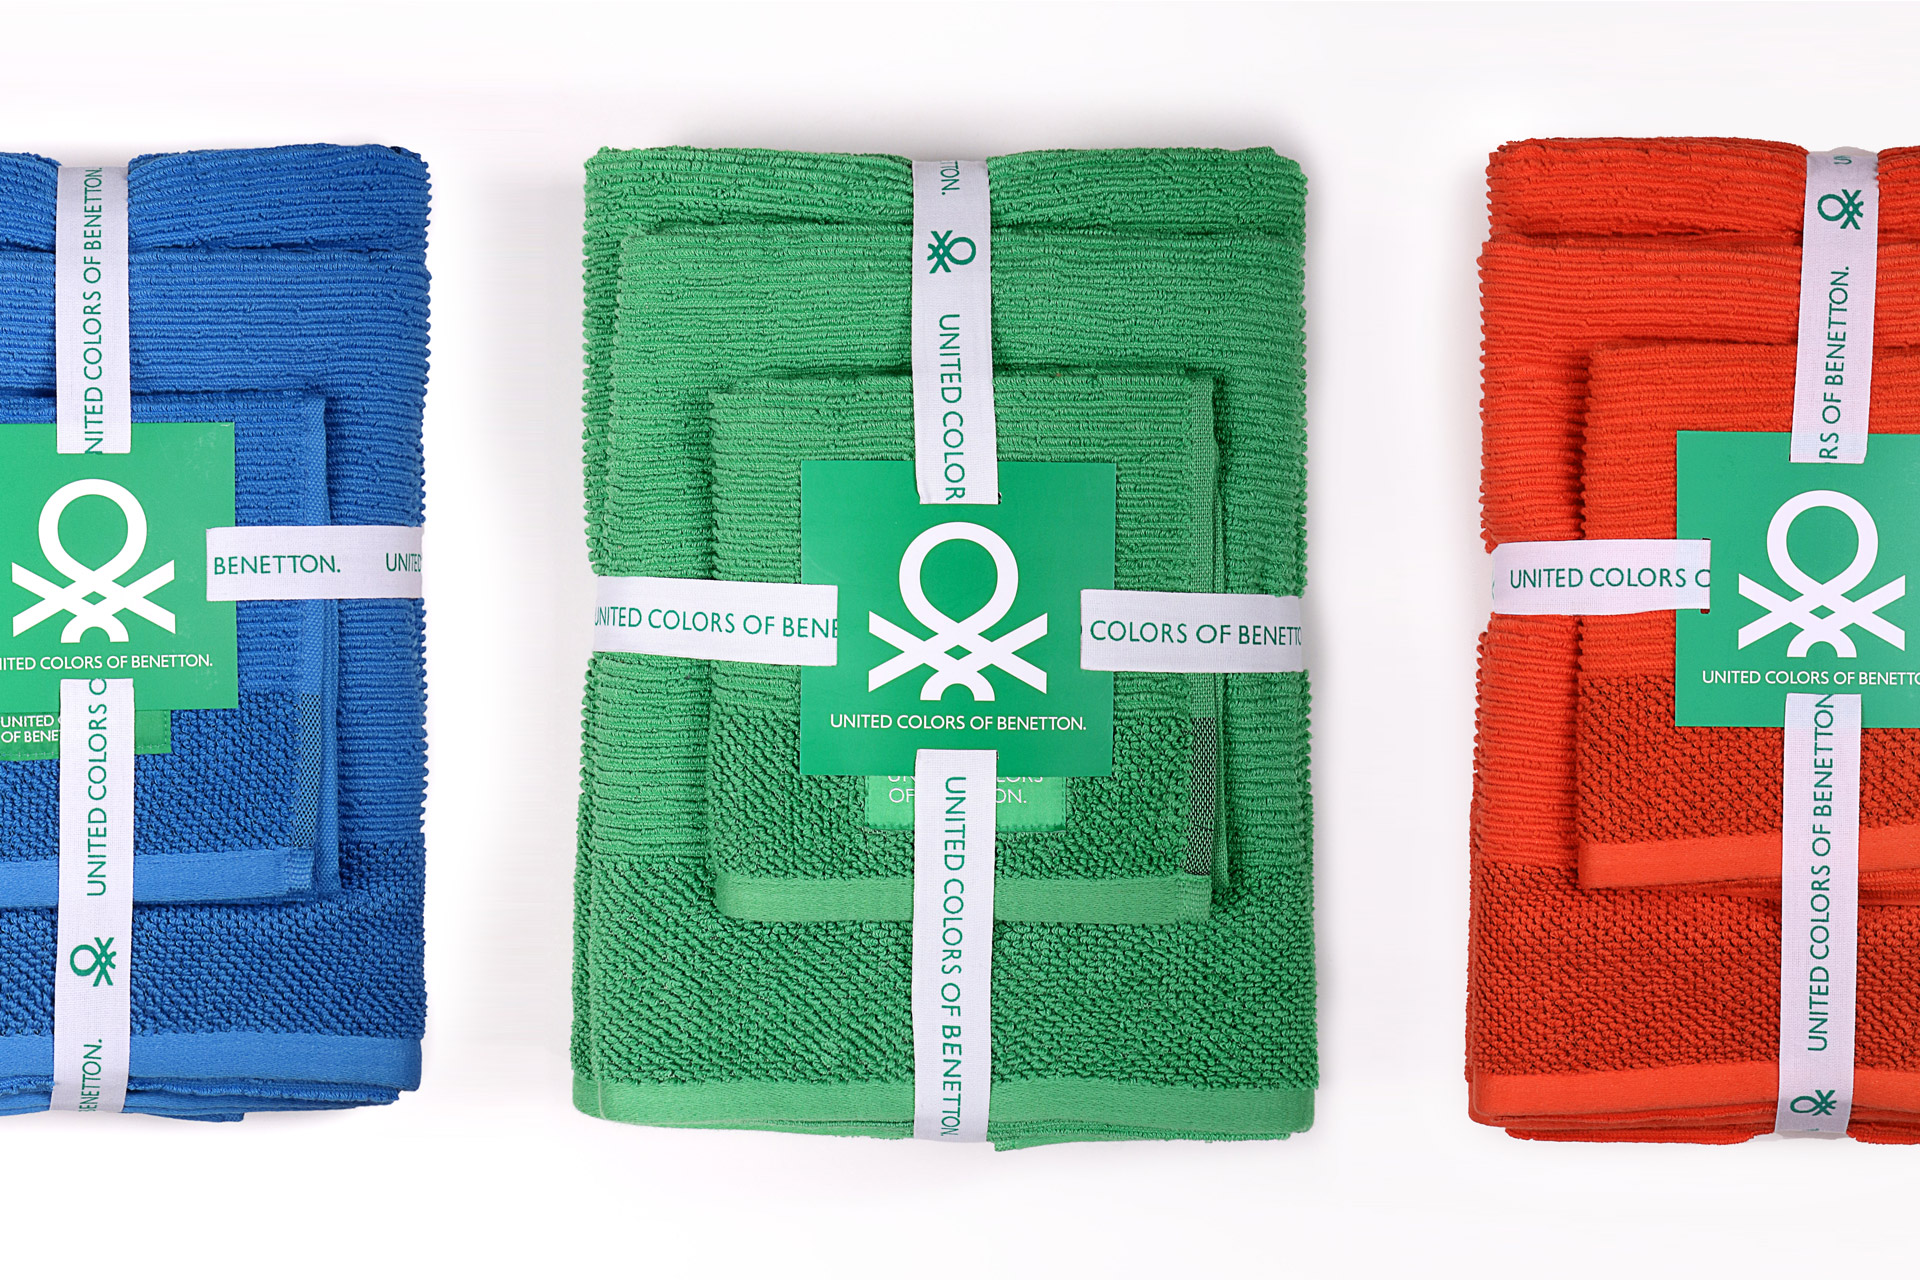 Verwarren spion mechanisme United Colors of Benetton - Official Site | Online Shop